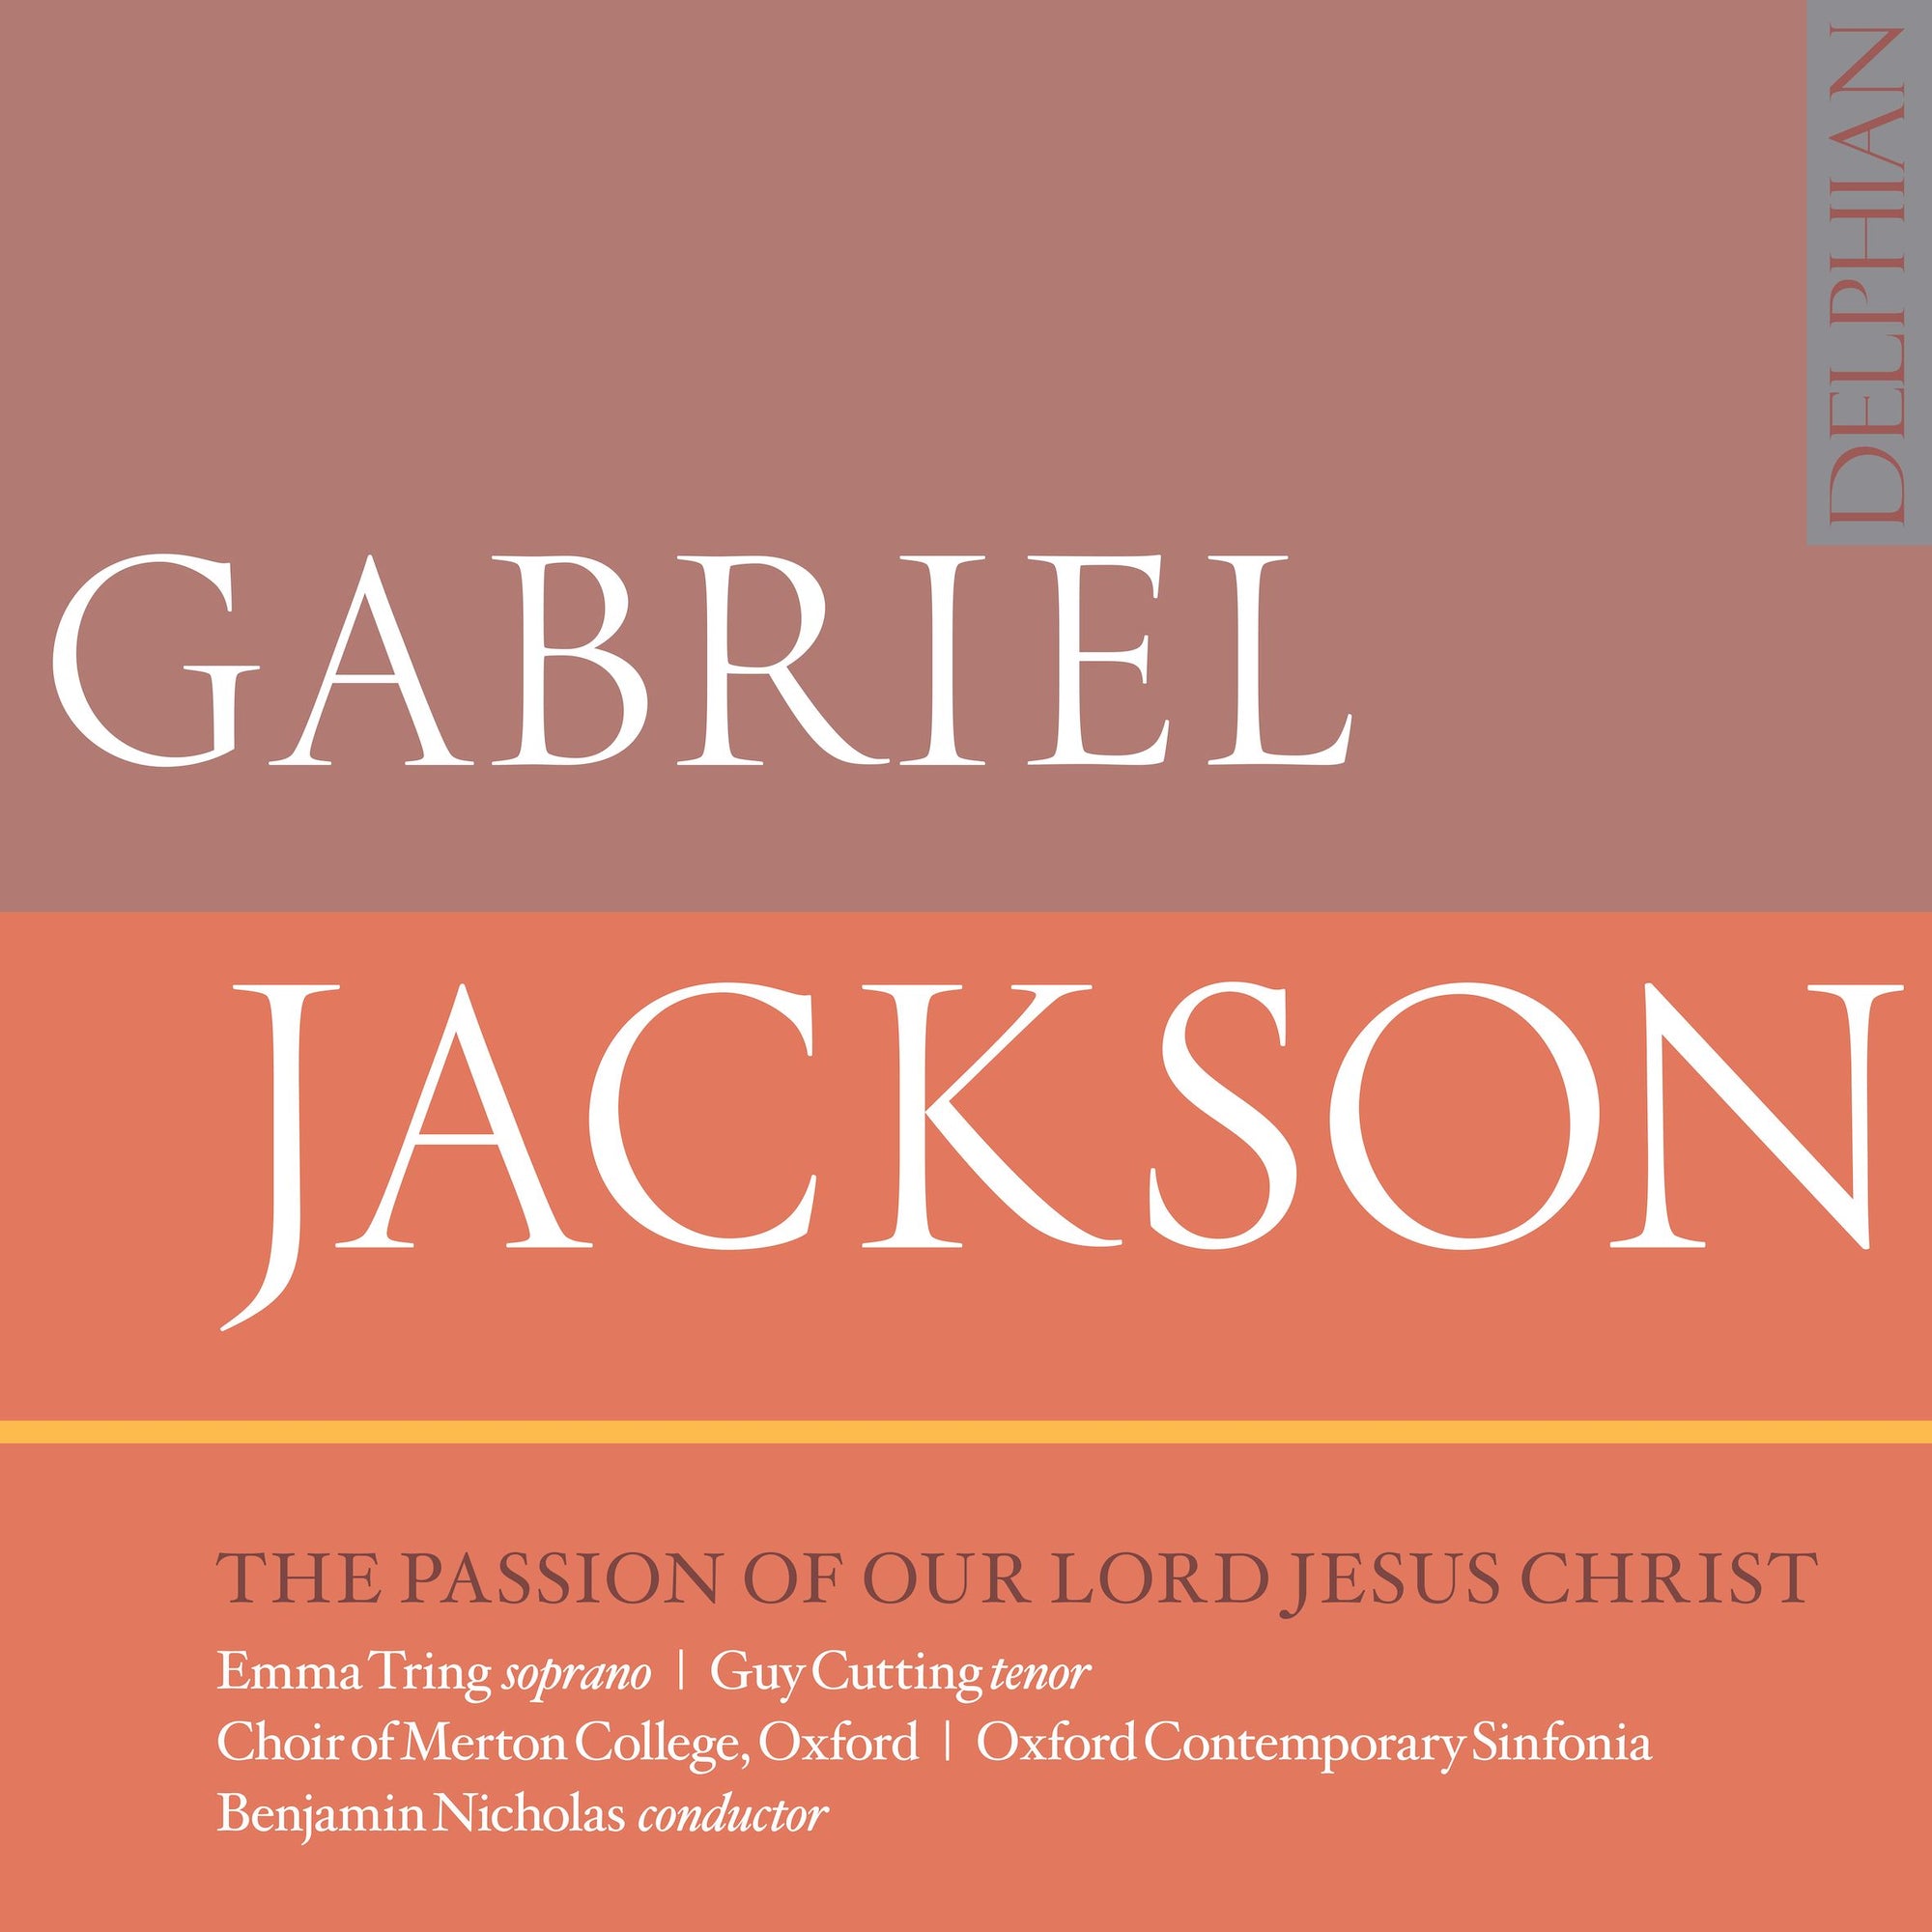 Gabriel Jackson: The Passion of our Lord Jesus Christ CD Delphian Records